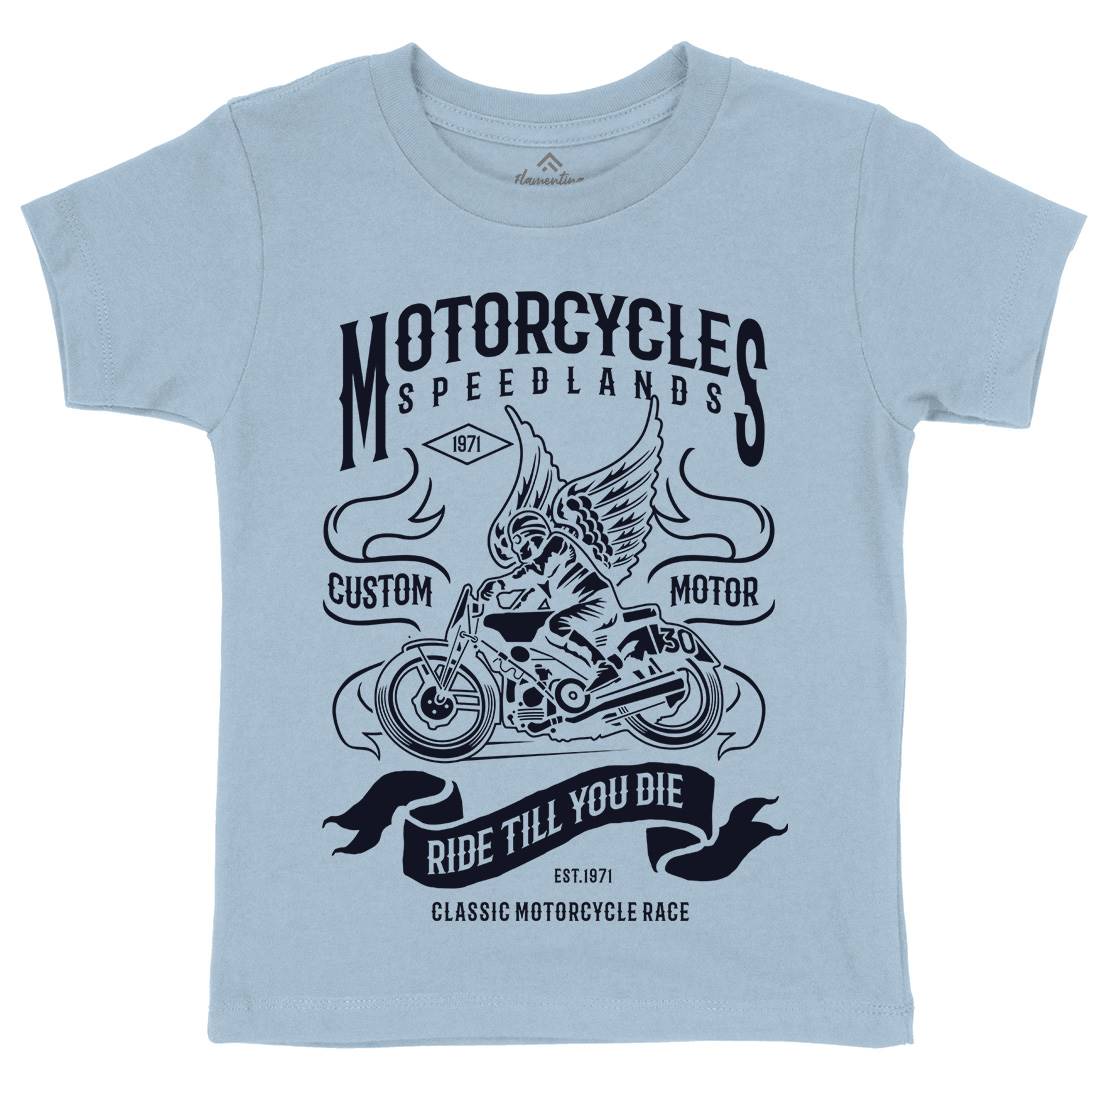 Speed Lands Kids Crew Neck T-Shirt Motorcycles B232